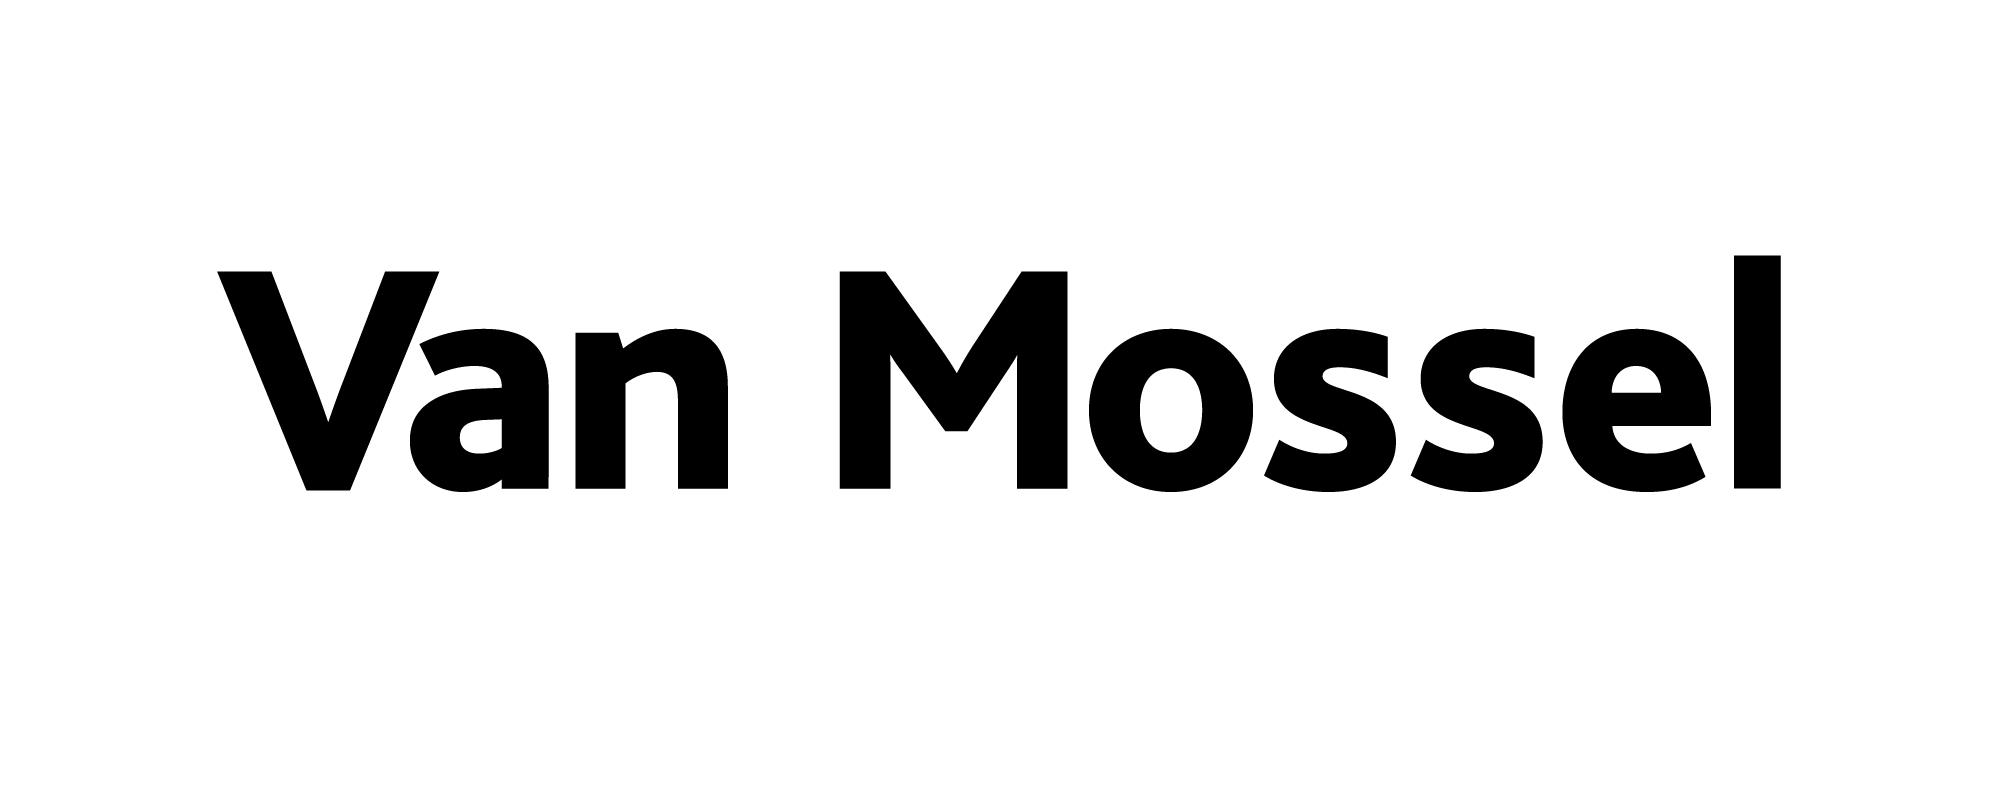 Van Mossel logo black